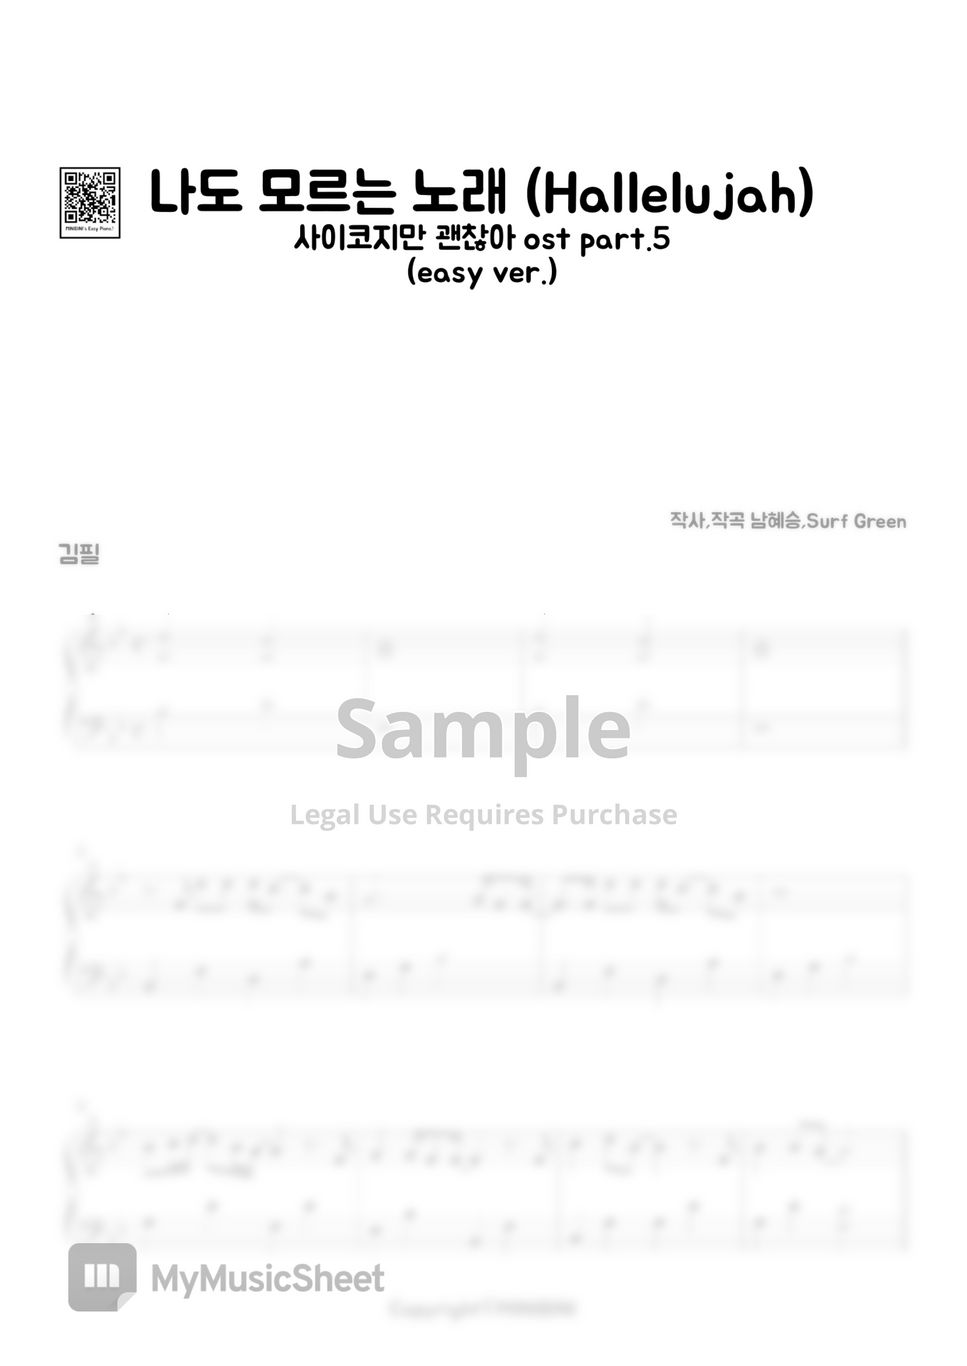 Kim Feel (김필) - Hallelujah (나도 모르는 노래) [사이코지만 괜찮아 OST Pt.5] (Easy Version) by MINIBINI